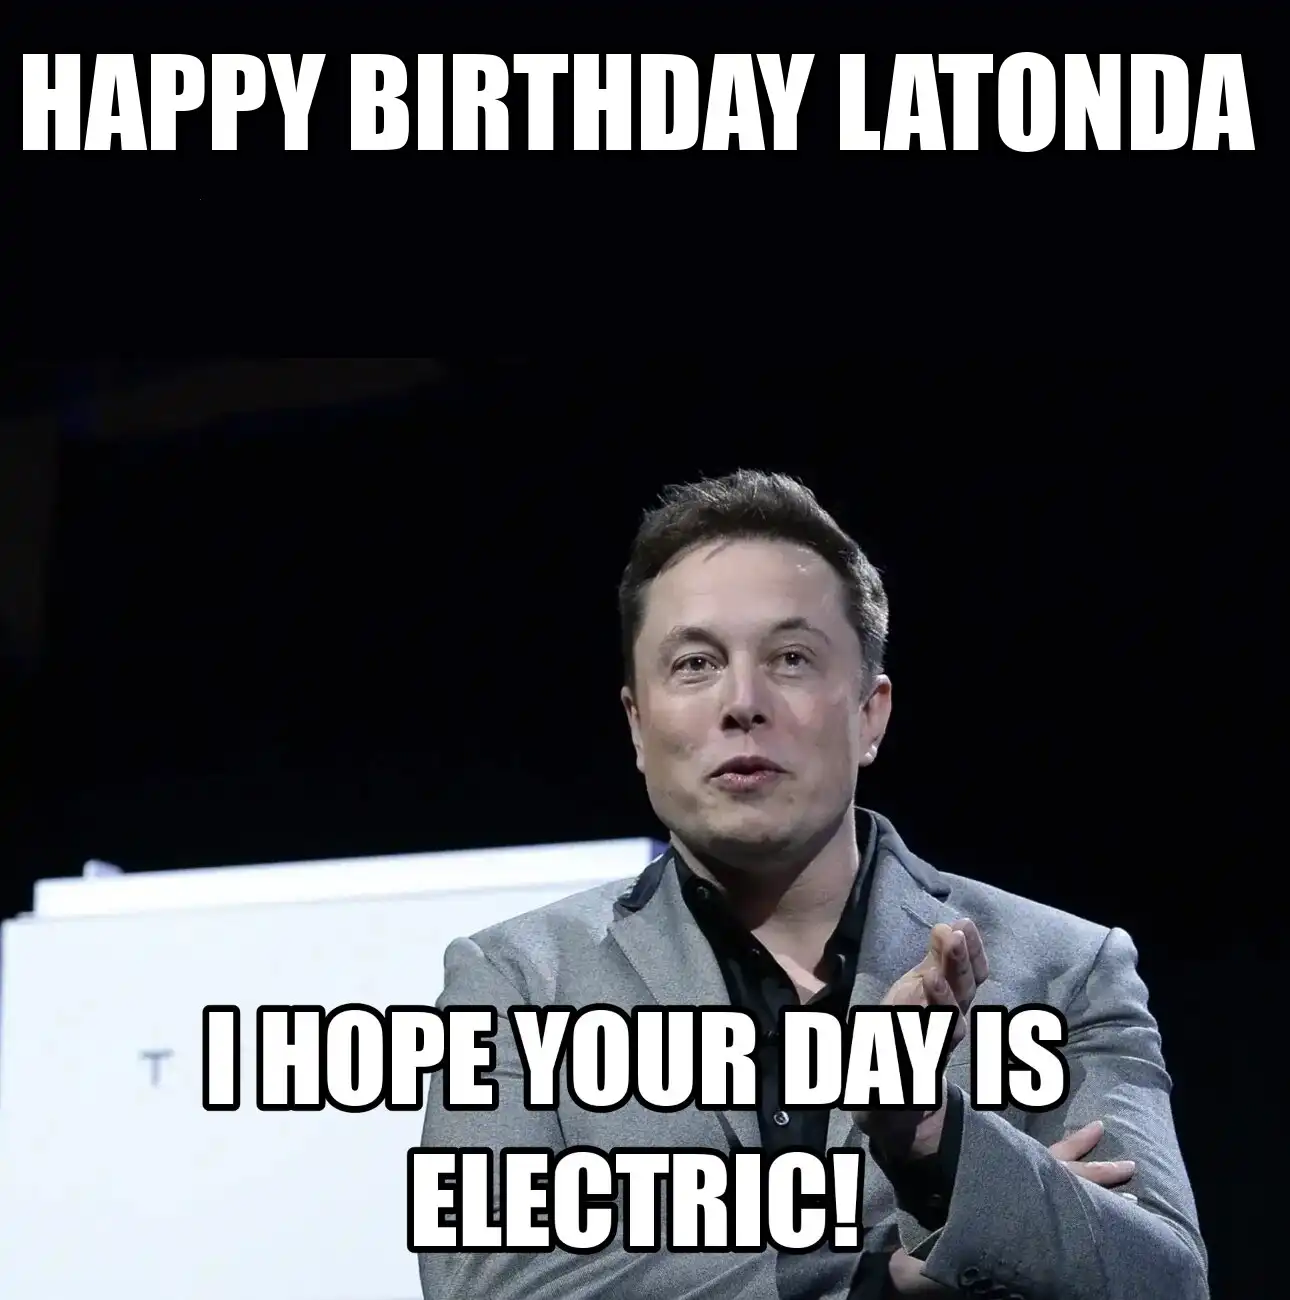 Happy Birthday Latonda I Hope Your Day Is Electric Meme